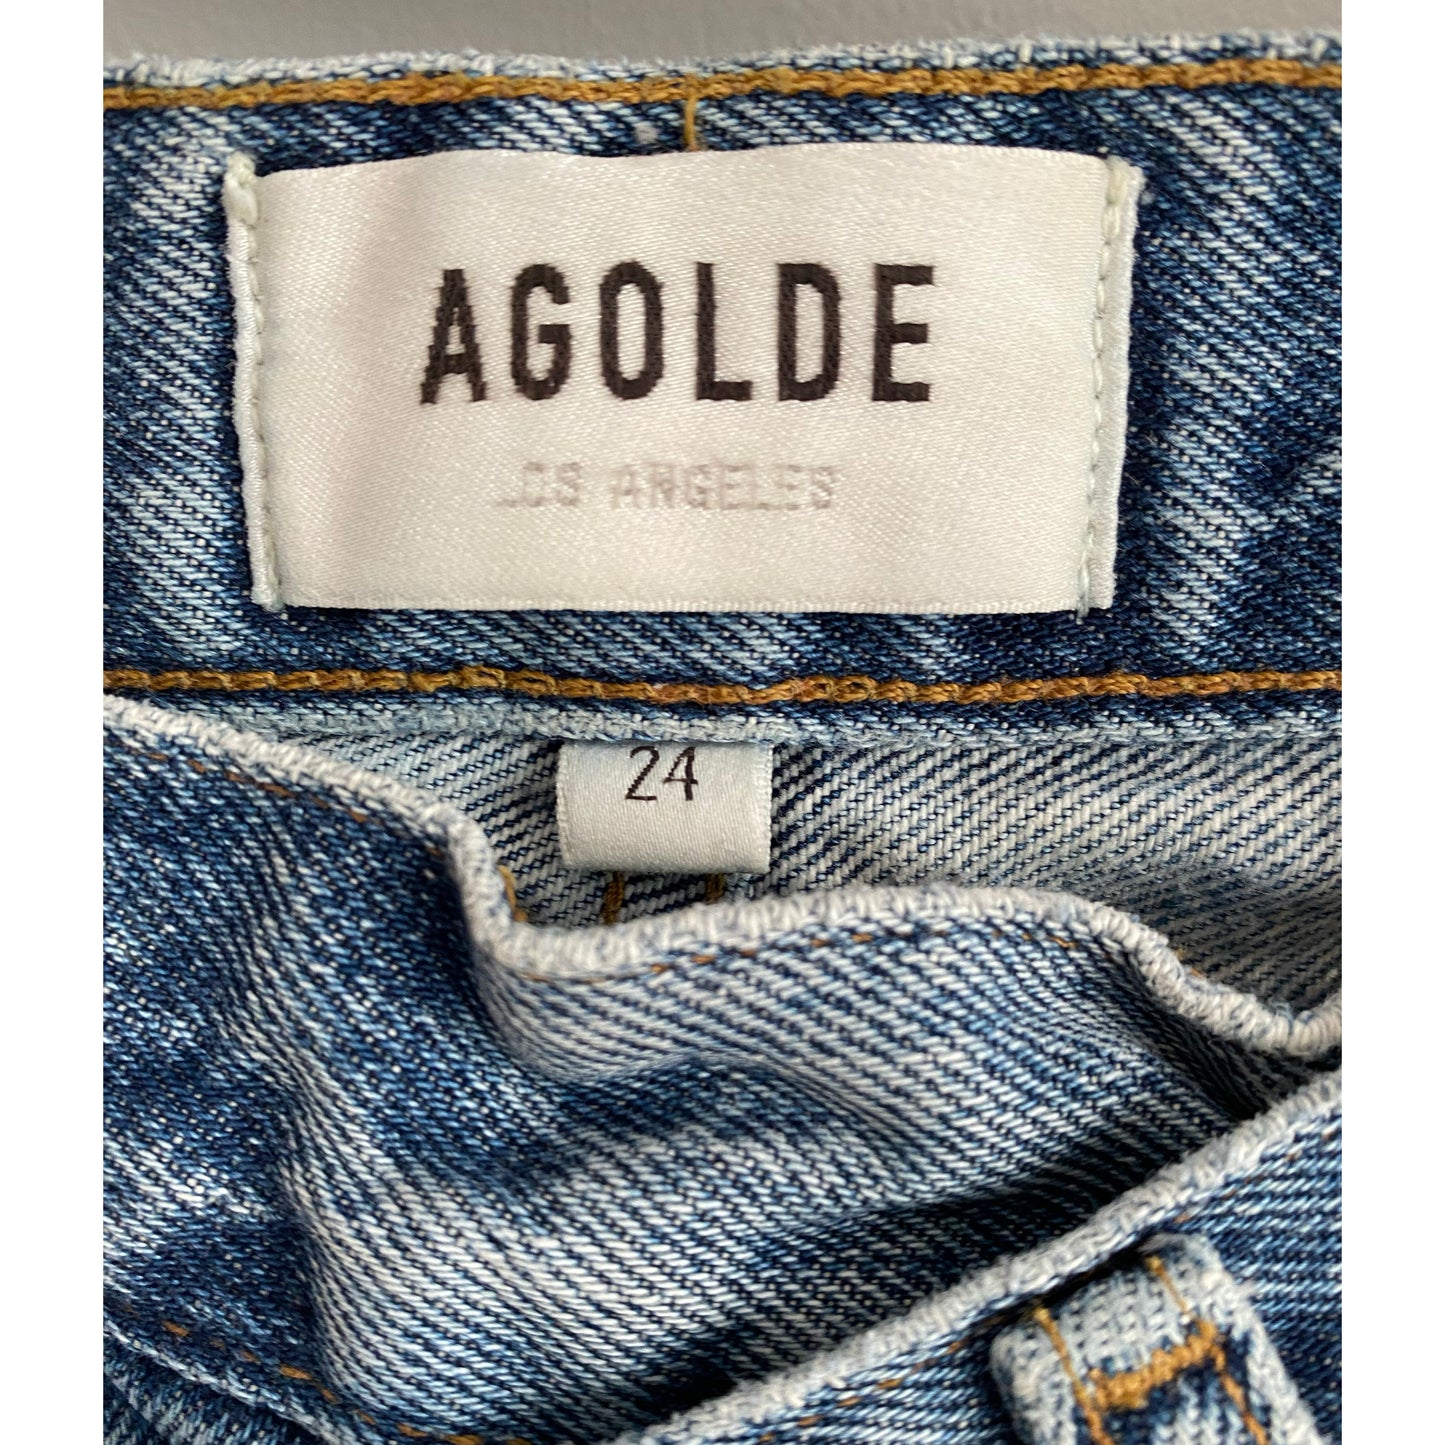 AGOLDE Criss Cross Shorts, size 24